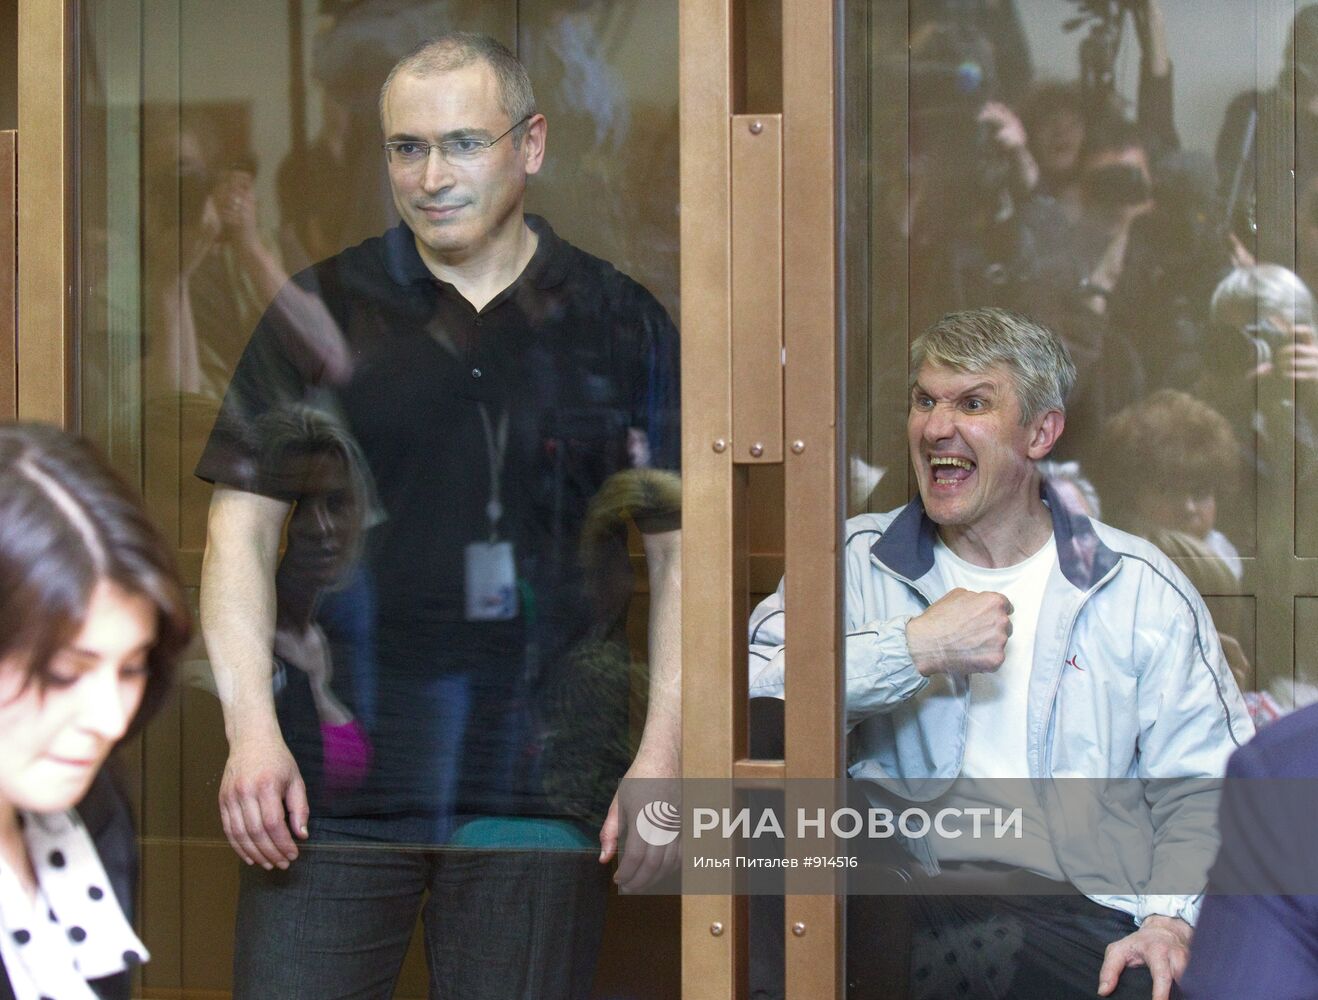 Михаил Ходорковский и Платон Лебедев